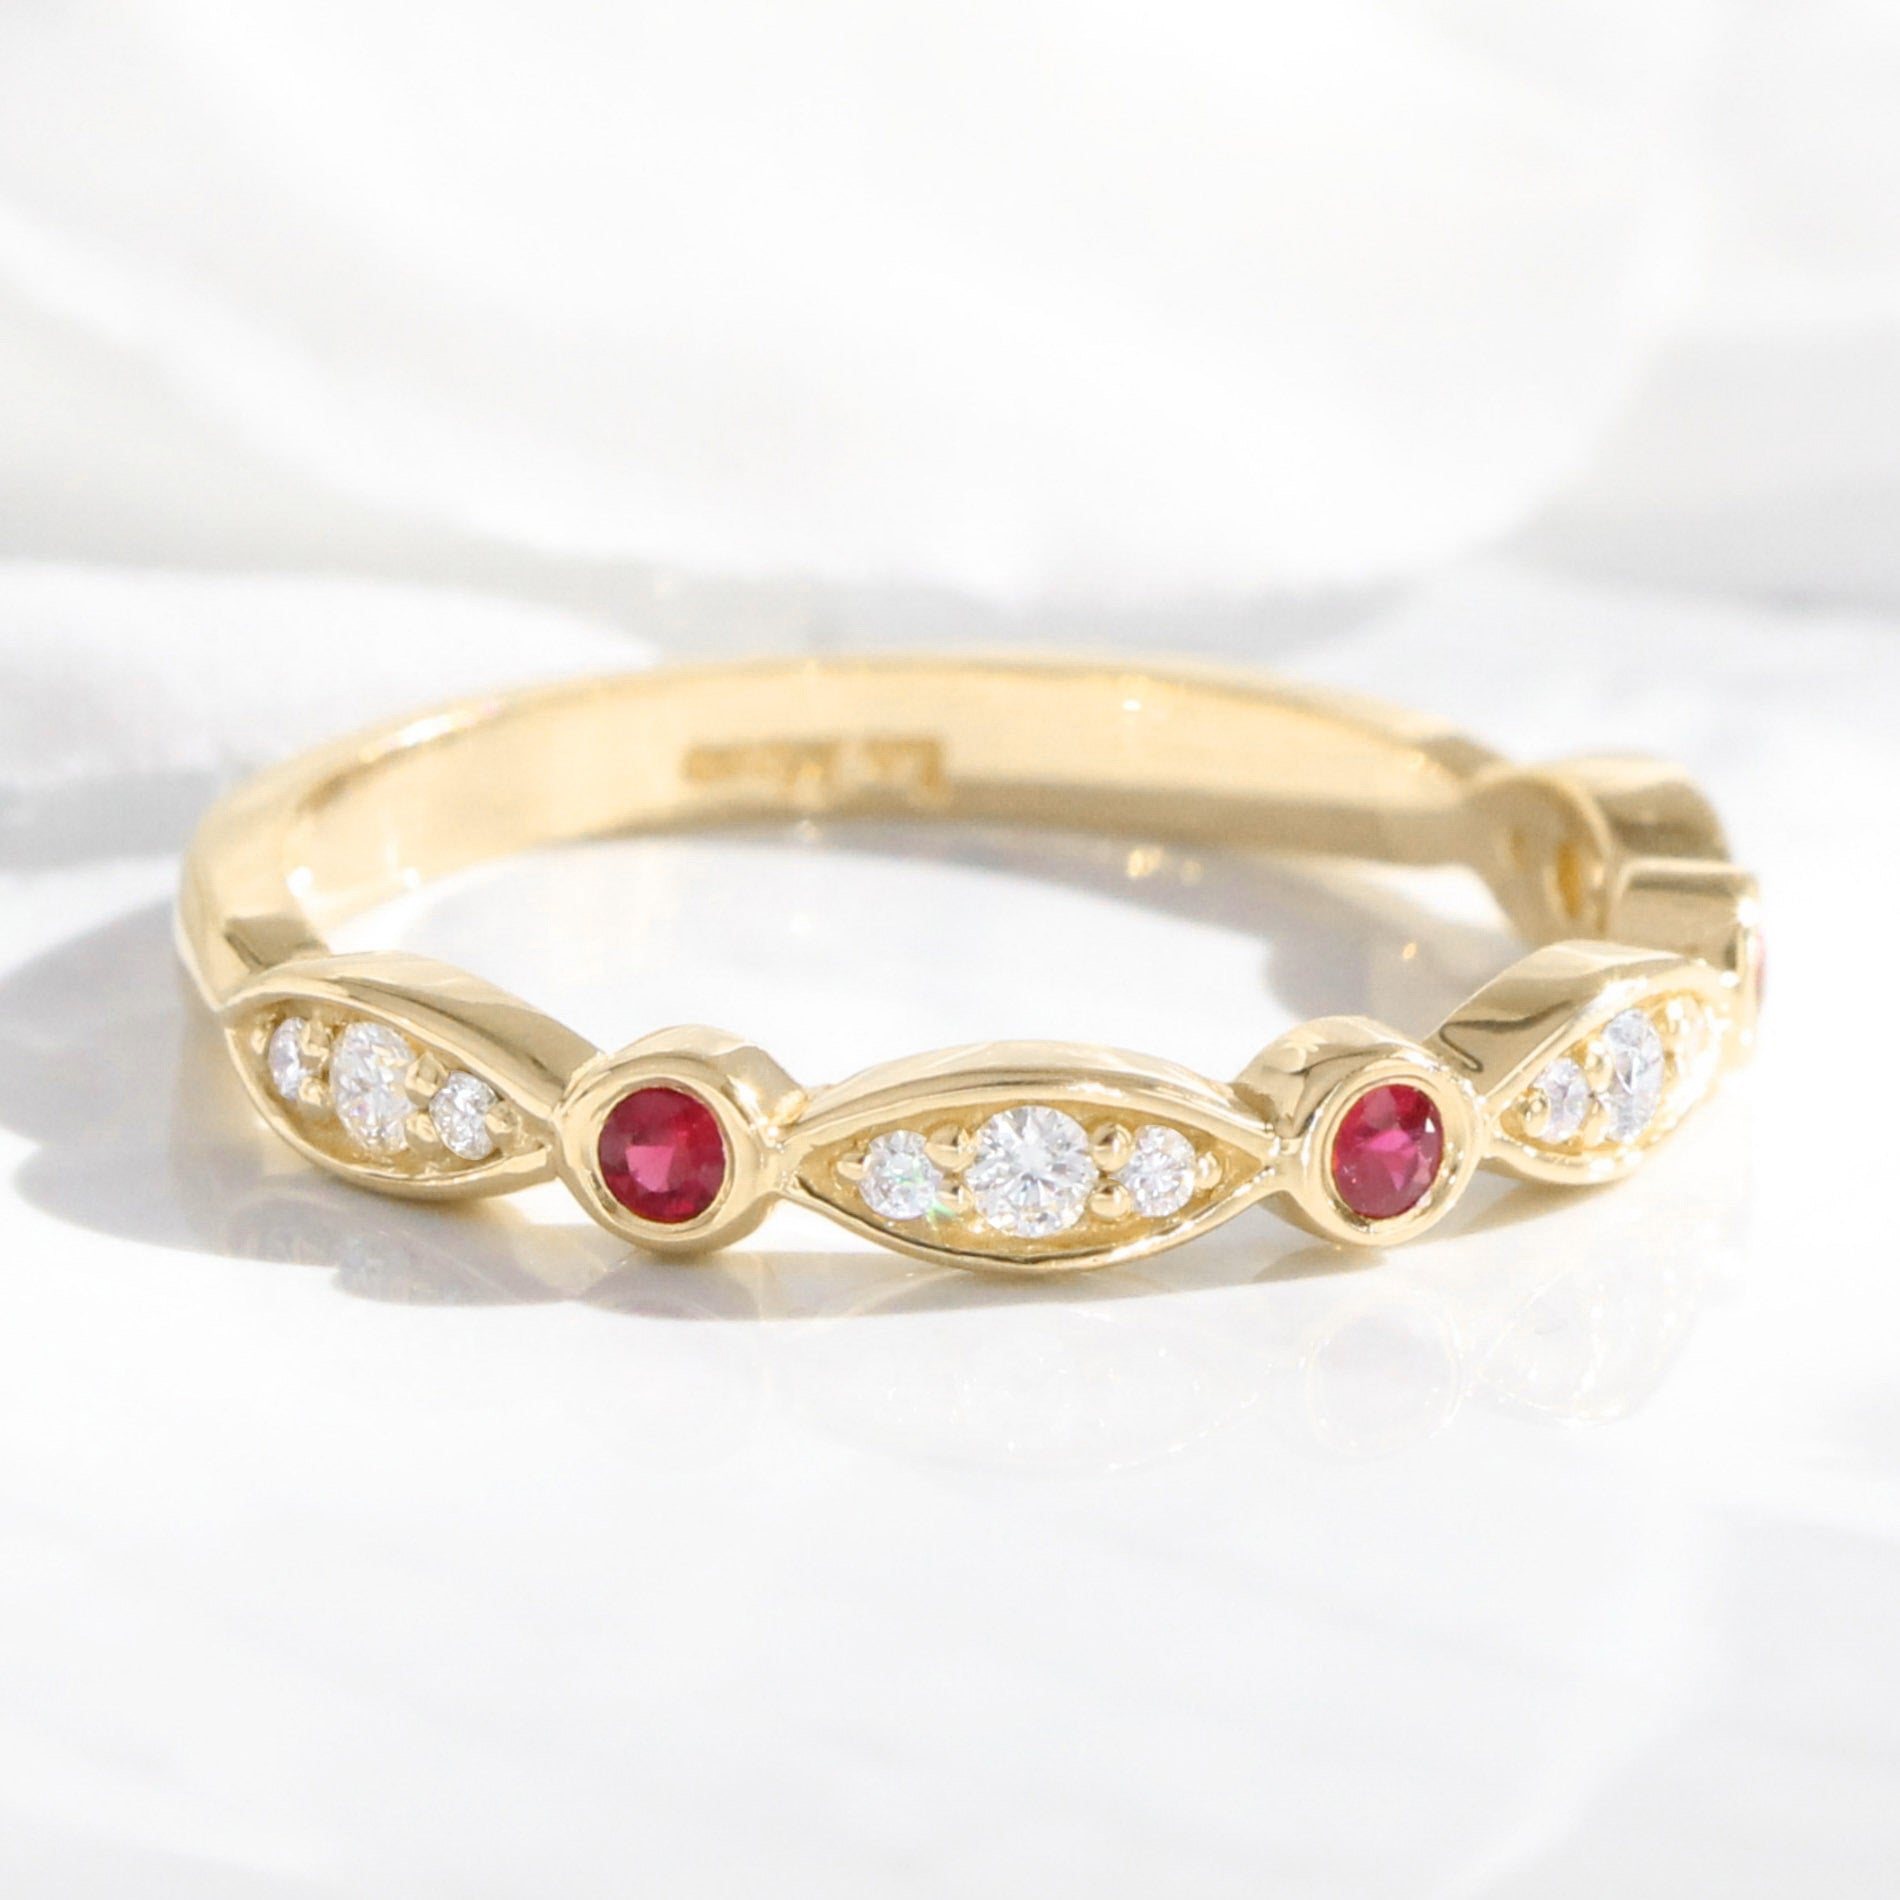 Bezel diamond and ruby wedding ring yellow gold scalloped half eternity band la more design jewelry